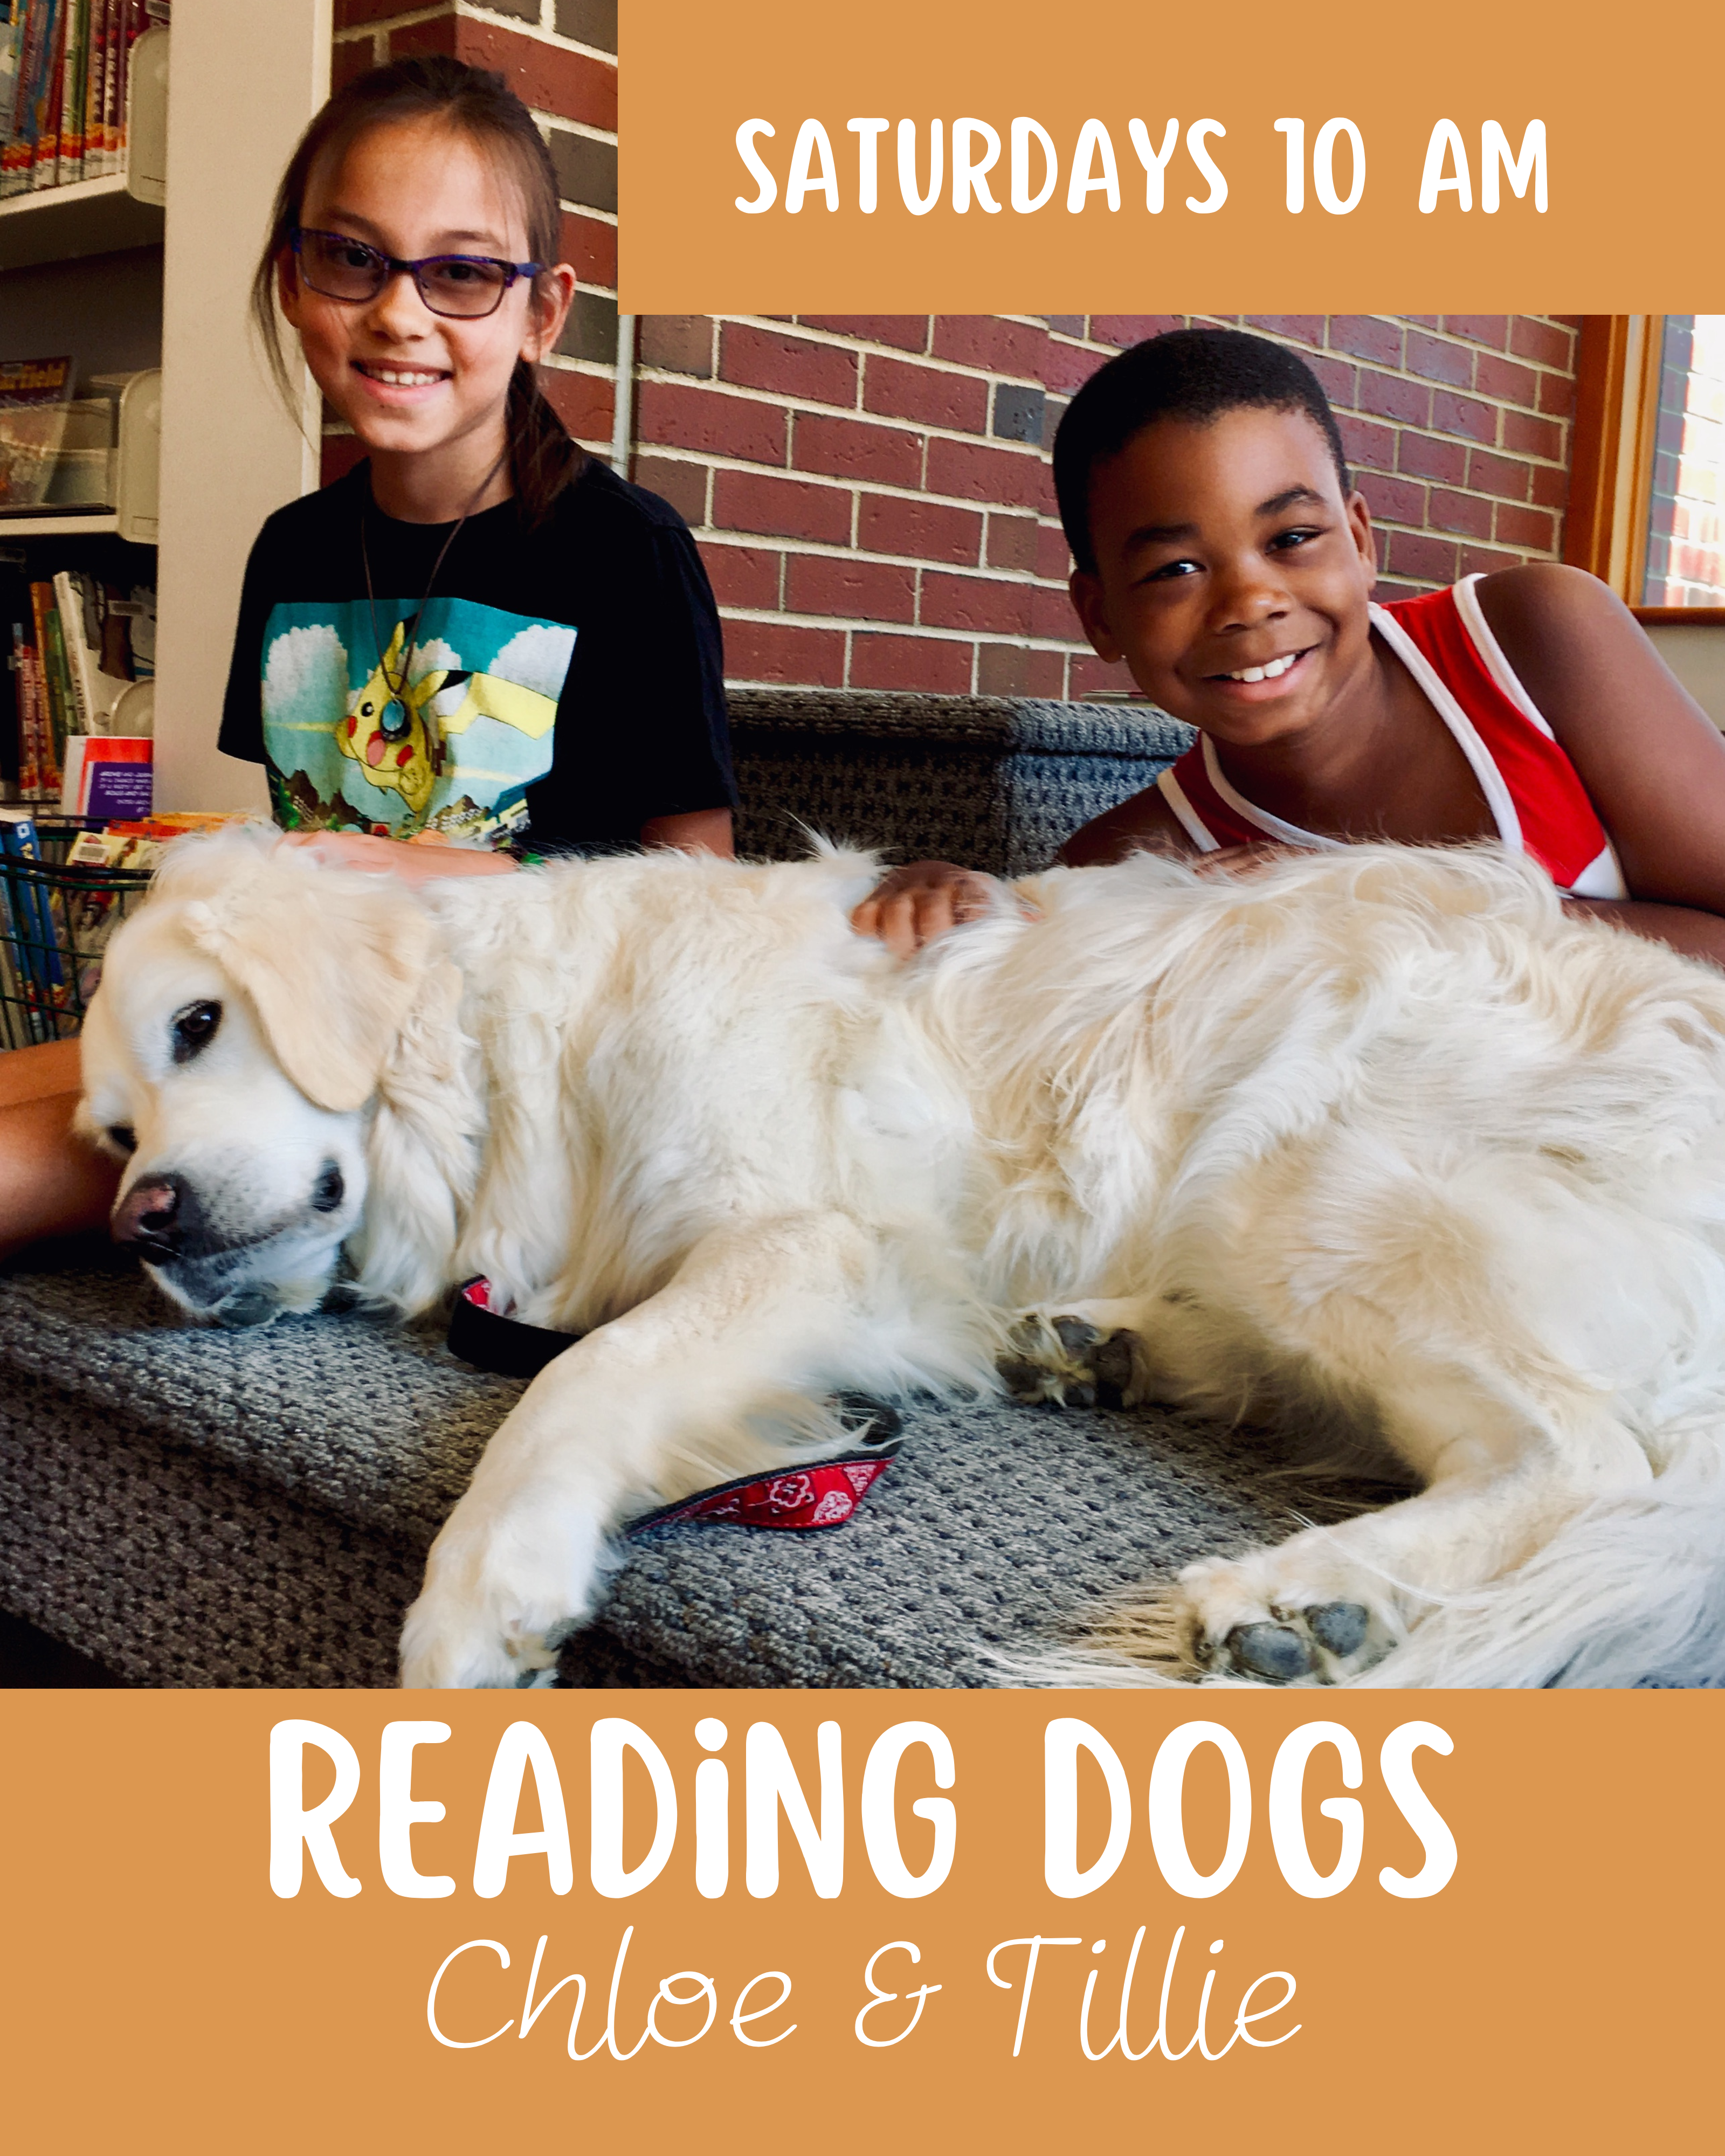 Saturday 10 AM Reading dogs Chloe & Tillie